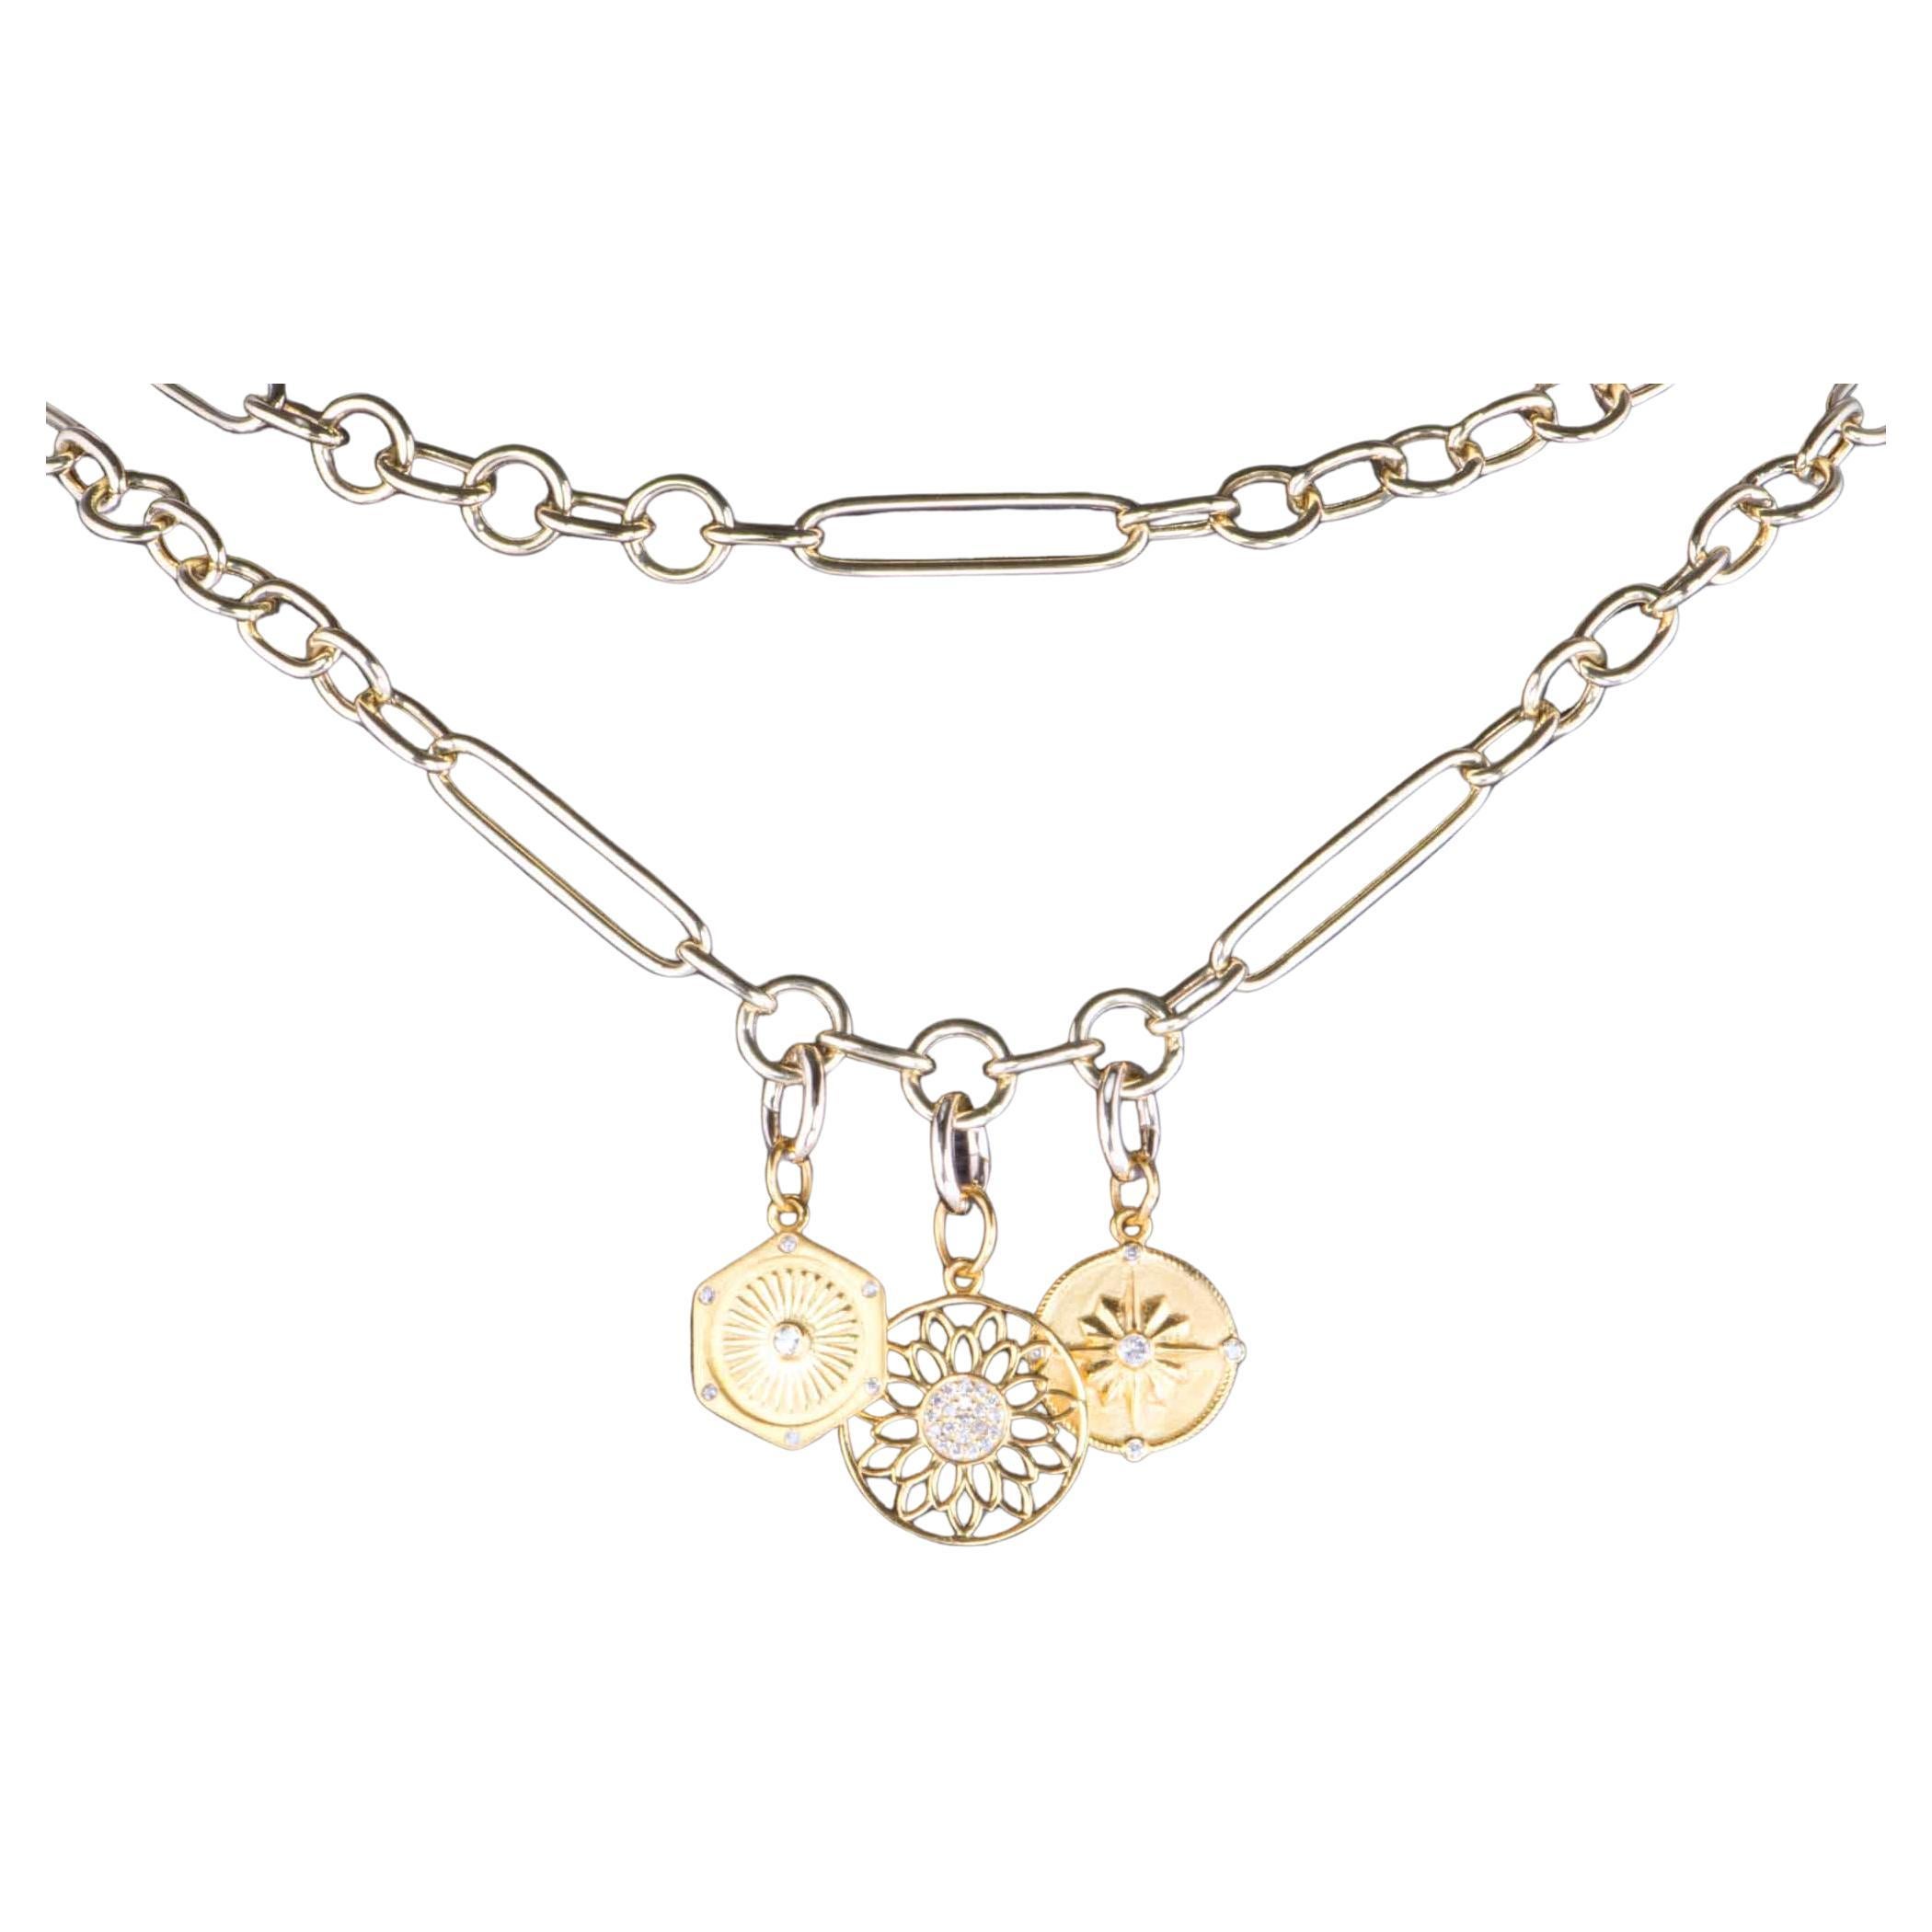 14K Gold Mixed Link Chain Necklace 18" Designer Annex Oval Round Links Adjustabl For Sale